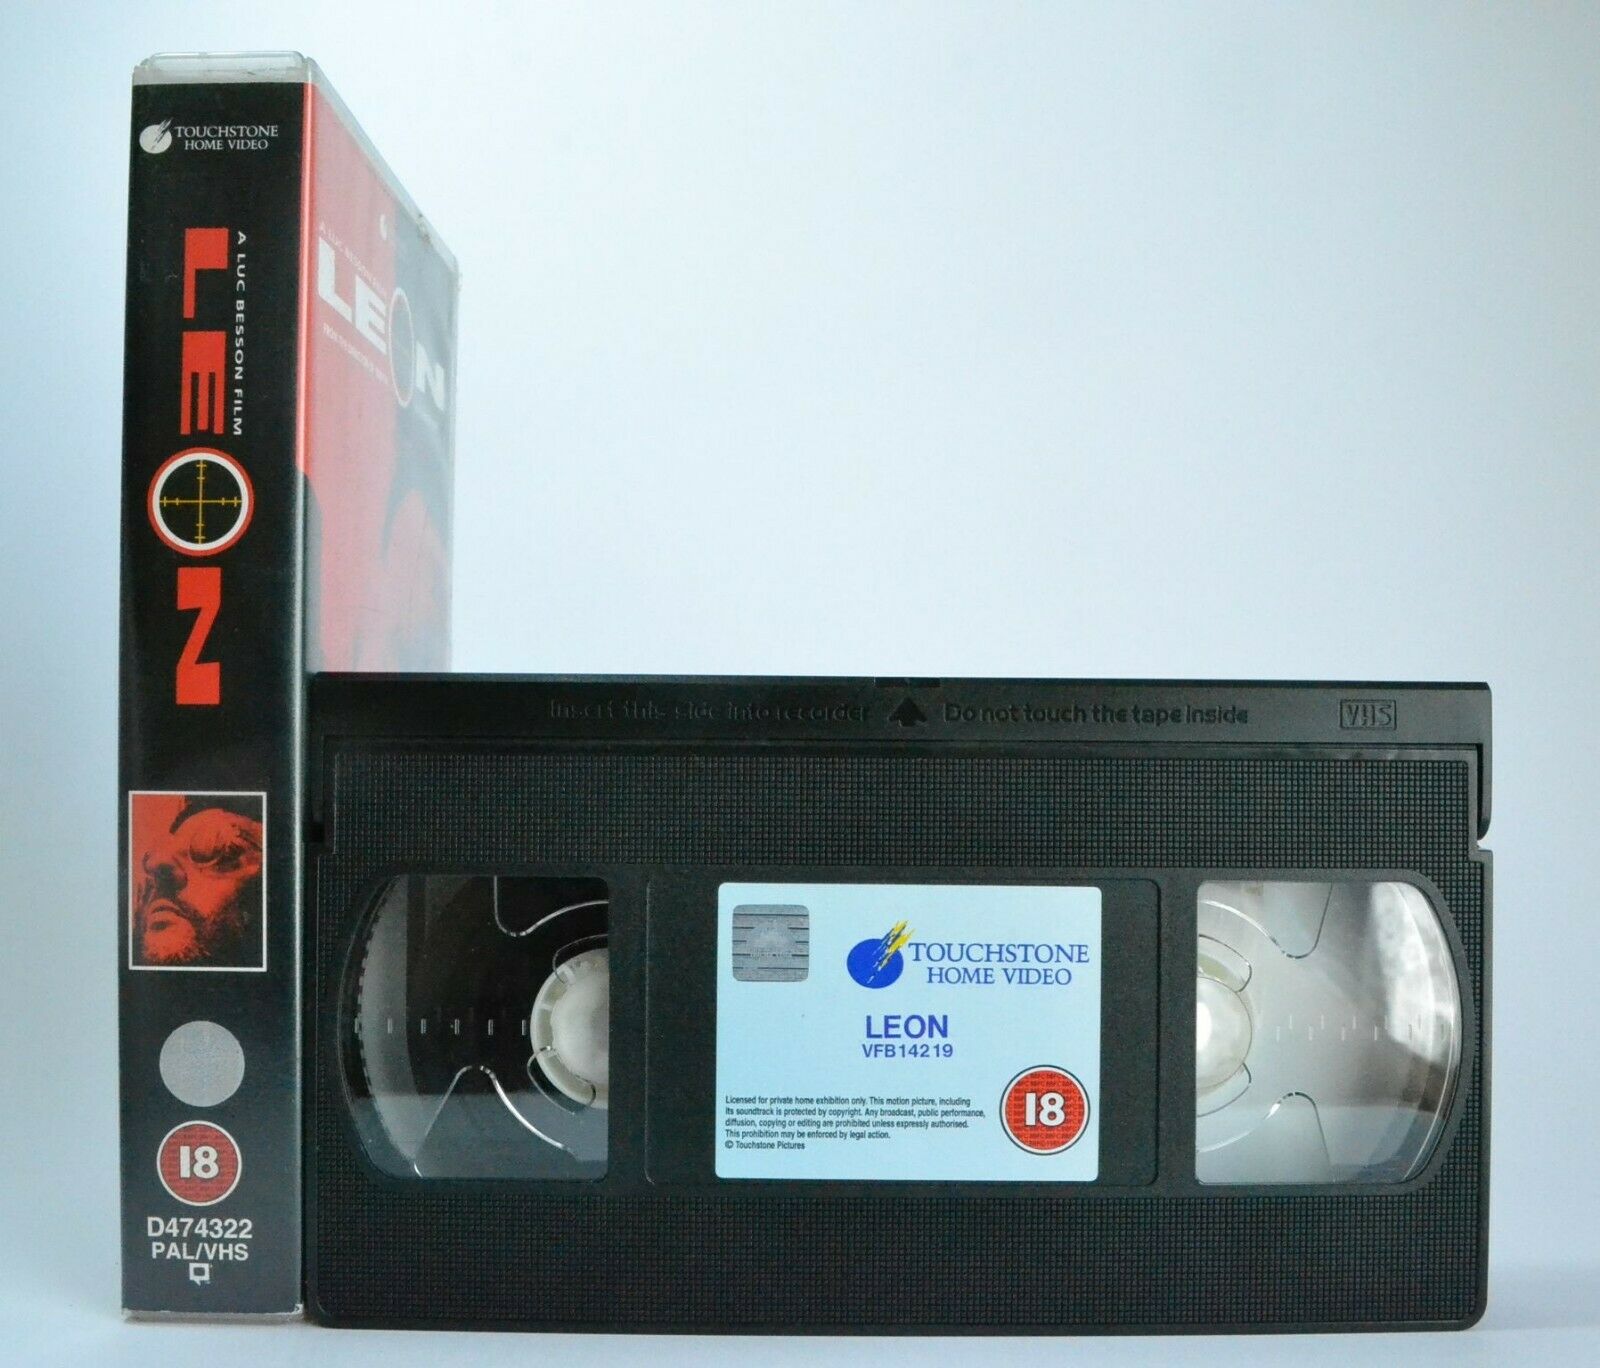 Leon (1994): Jean Reno Vs. Gary Oldman - English/French Action Thriller - VHS-